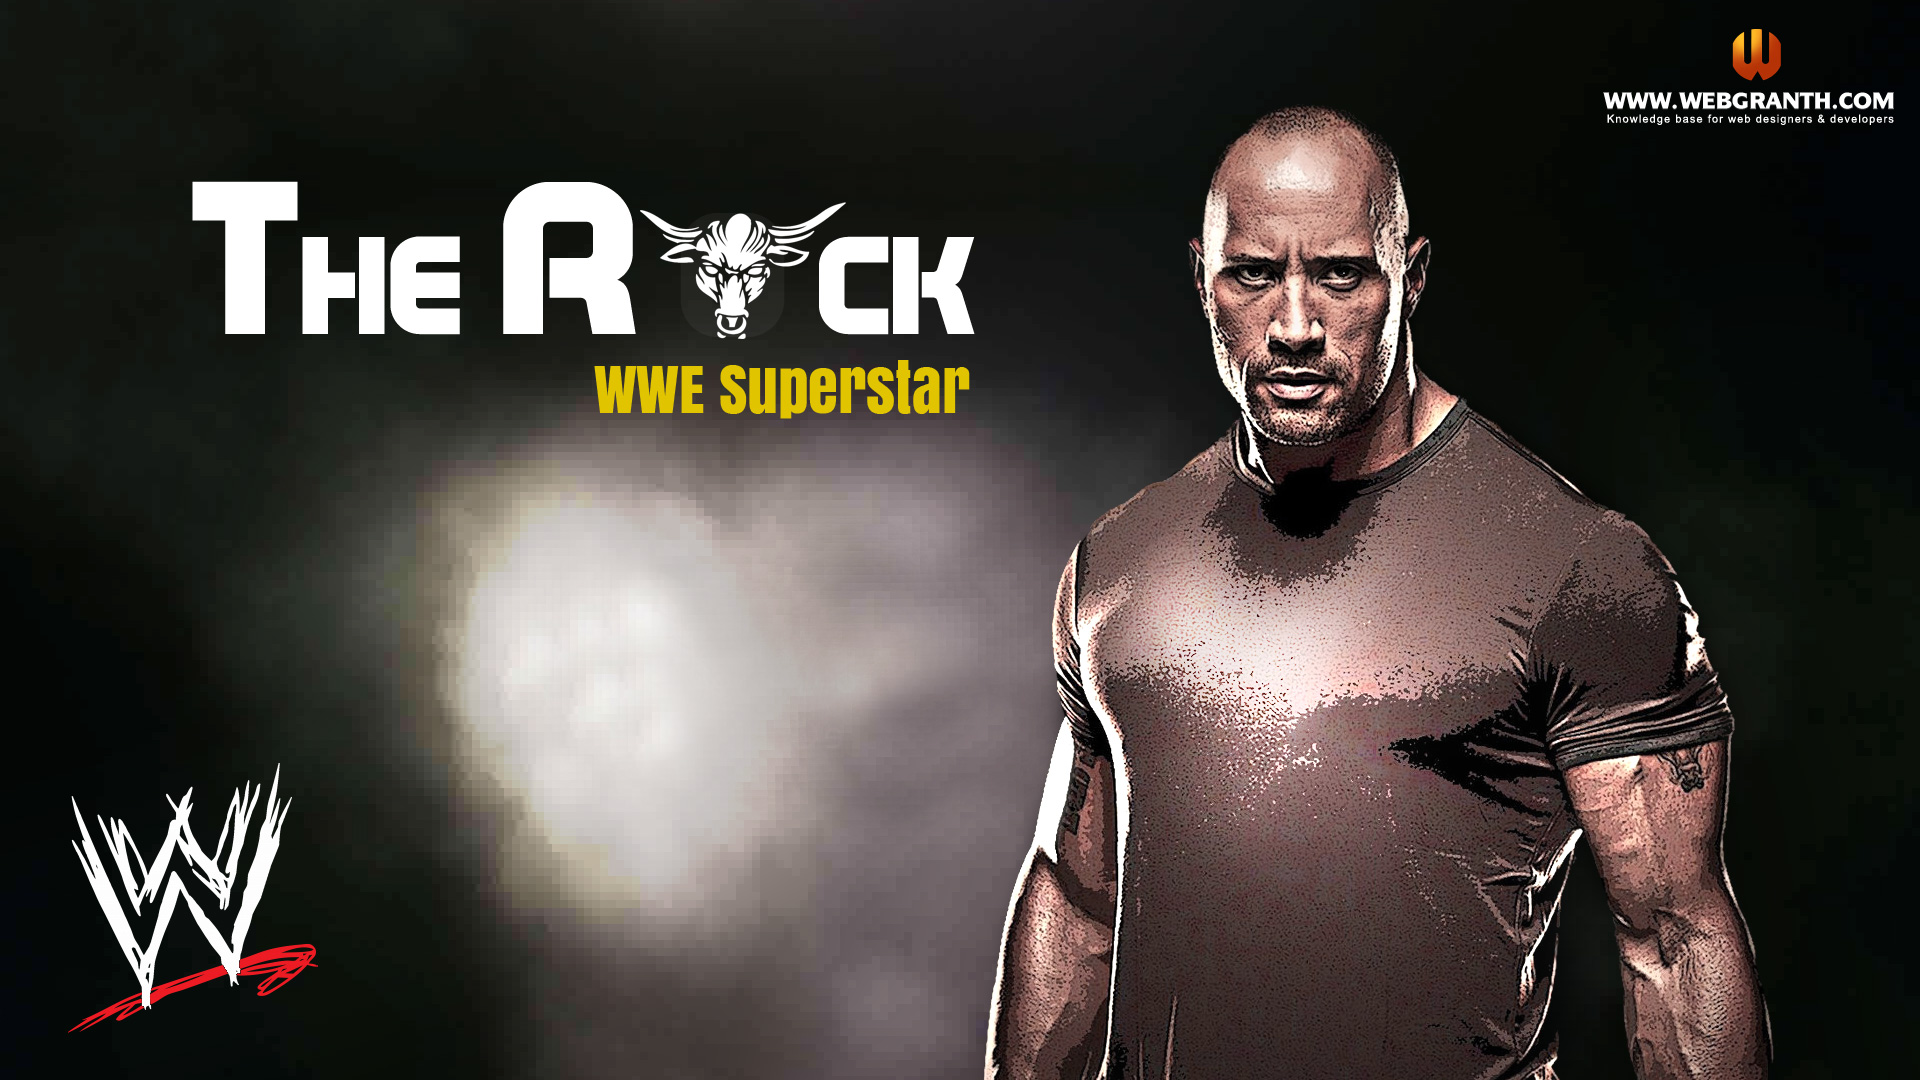 WWE The Rock HD Wallpaper Free Download 3: View HD Image of WWE ...